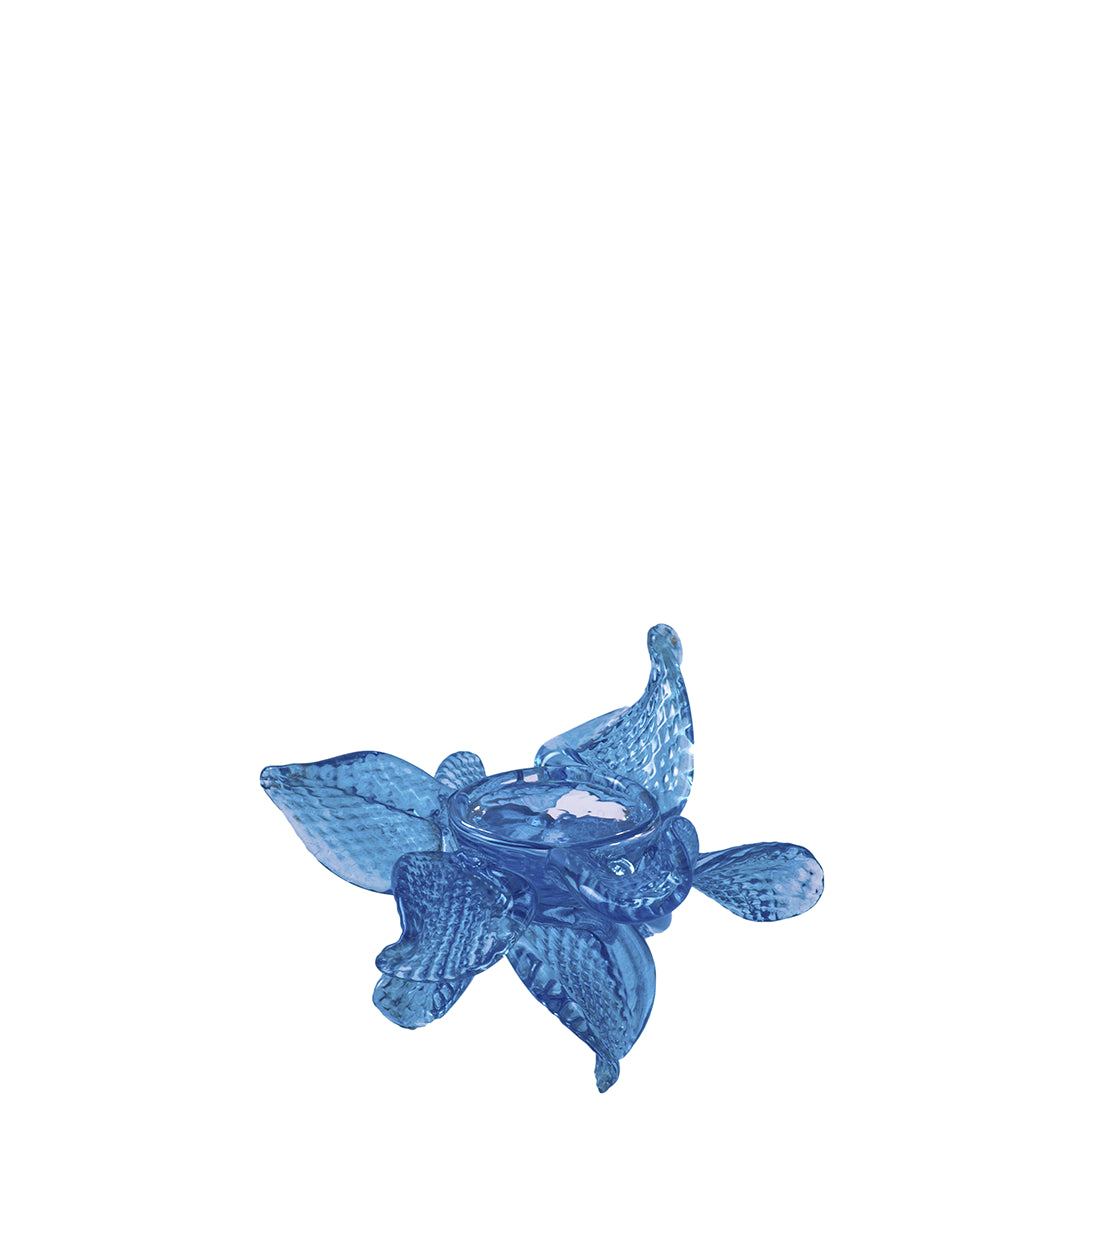 JIRI PACINEK - Blue Candle Holder - Sleek Design with a Stunning Blue Hue